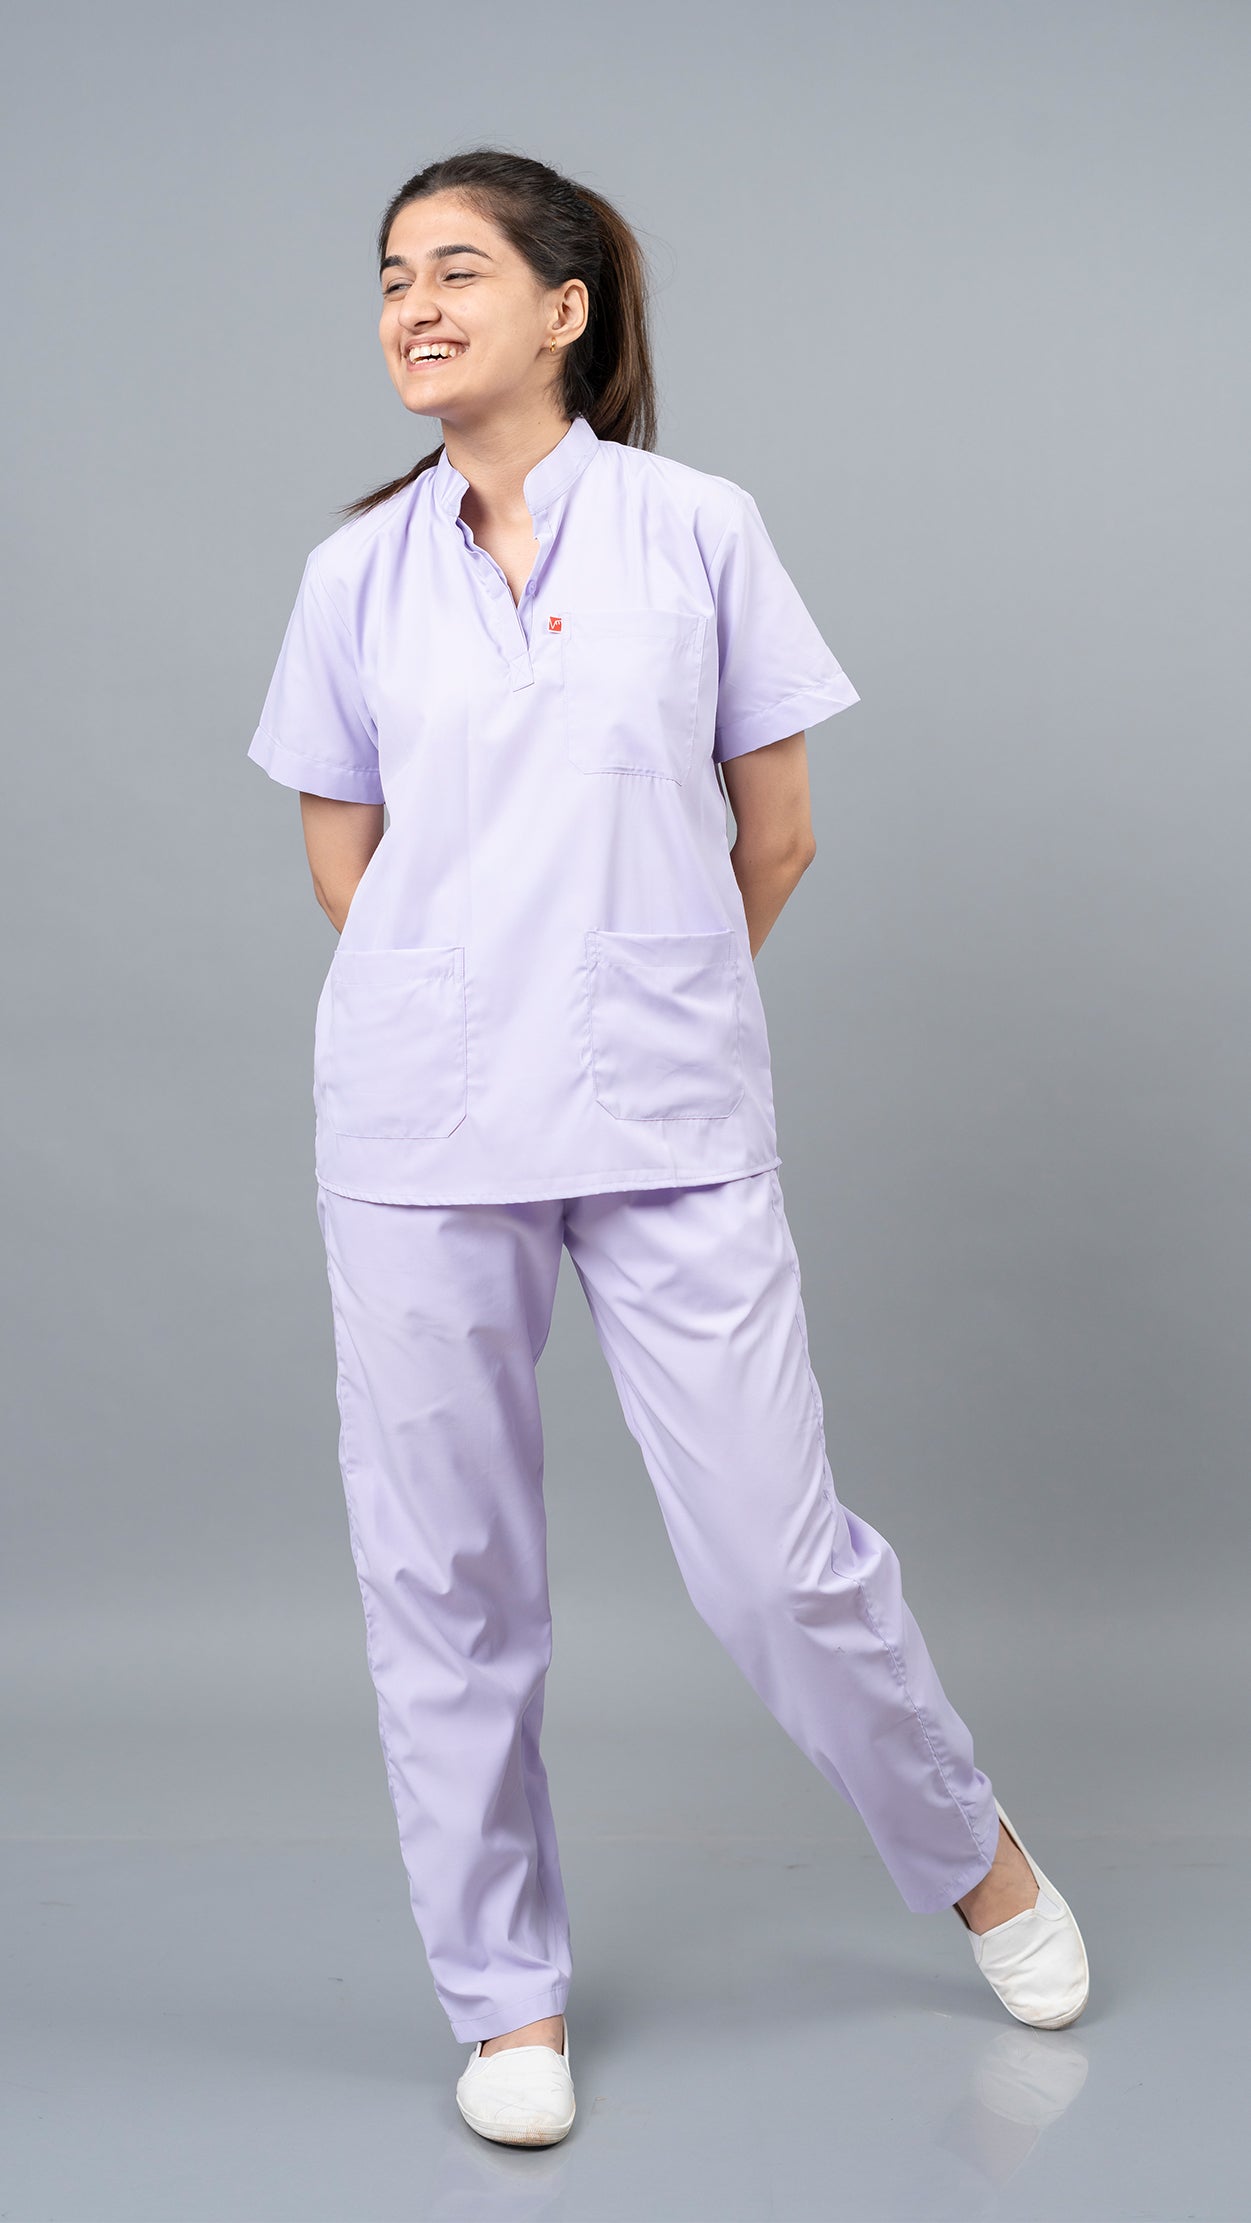 Vastramedwear’s Lavender Women's Mandarin Collar Scrub Suit for Doctors